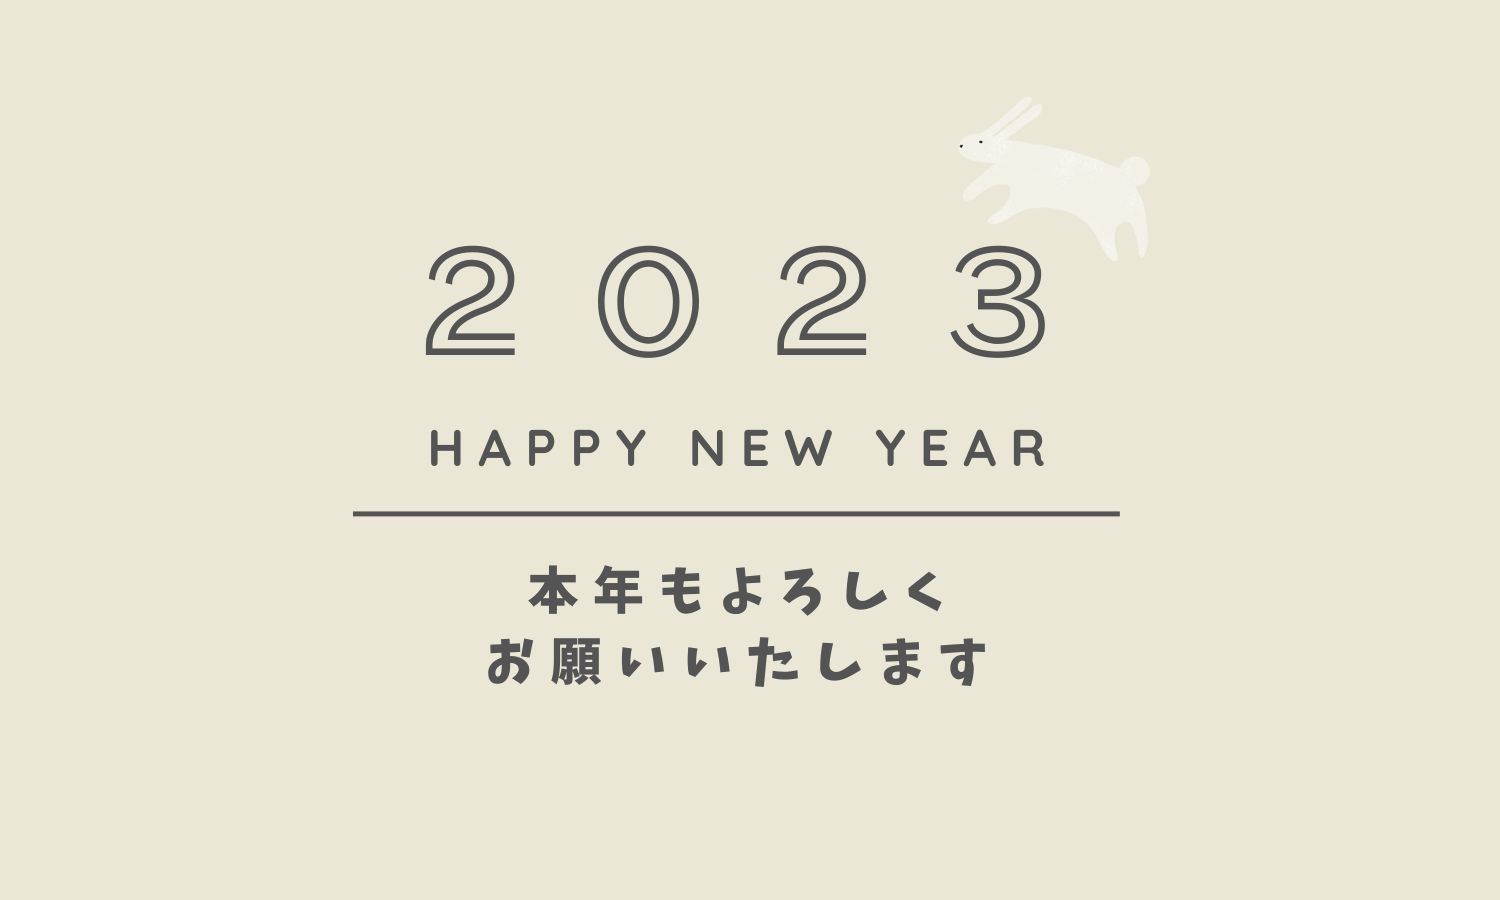 HAPPY NEW YEAR 2023